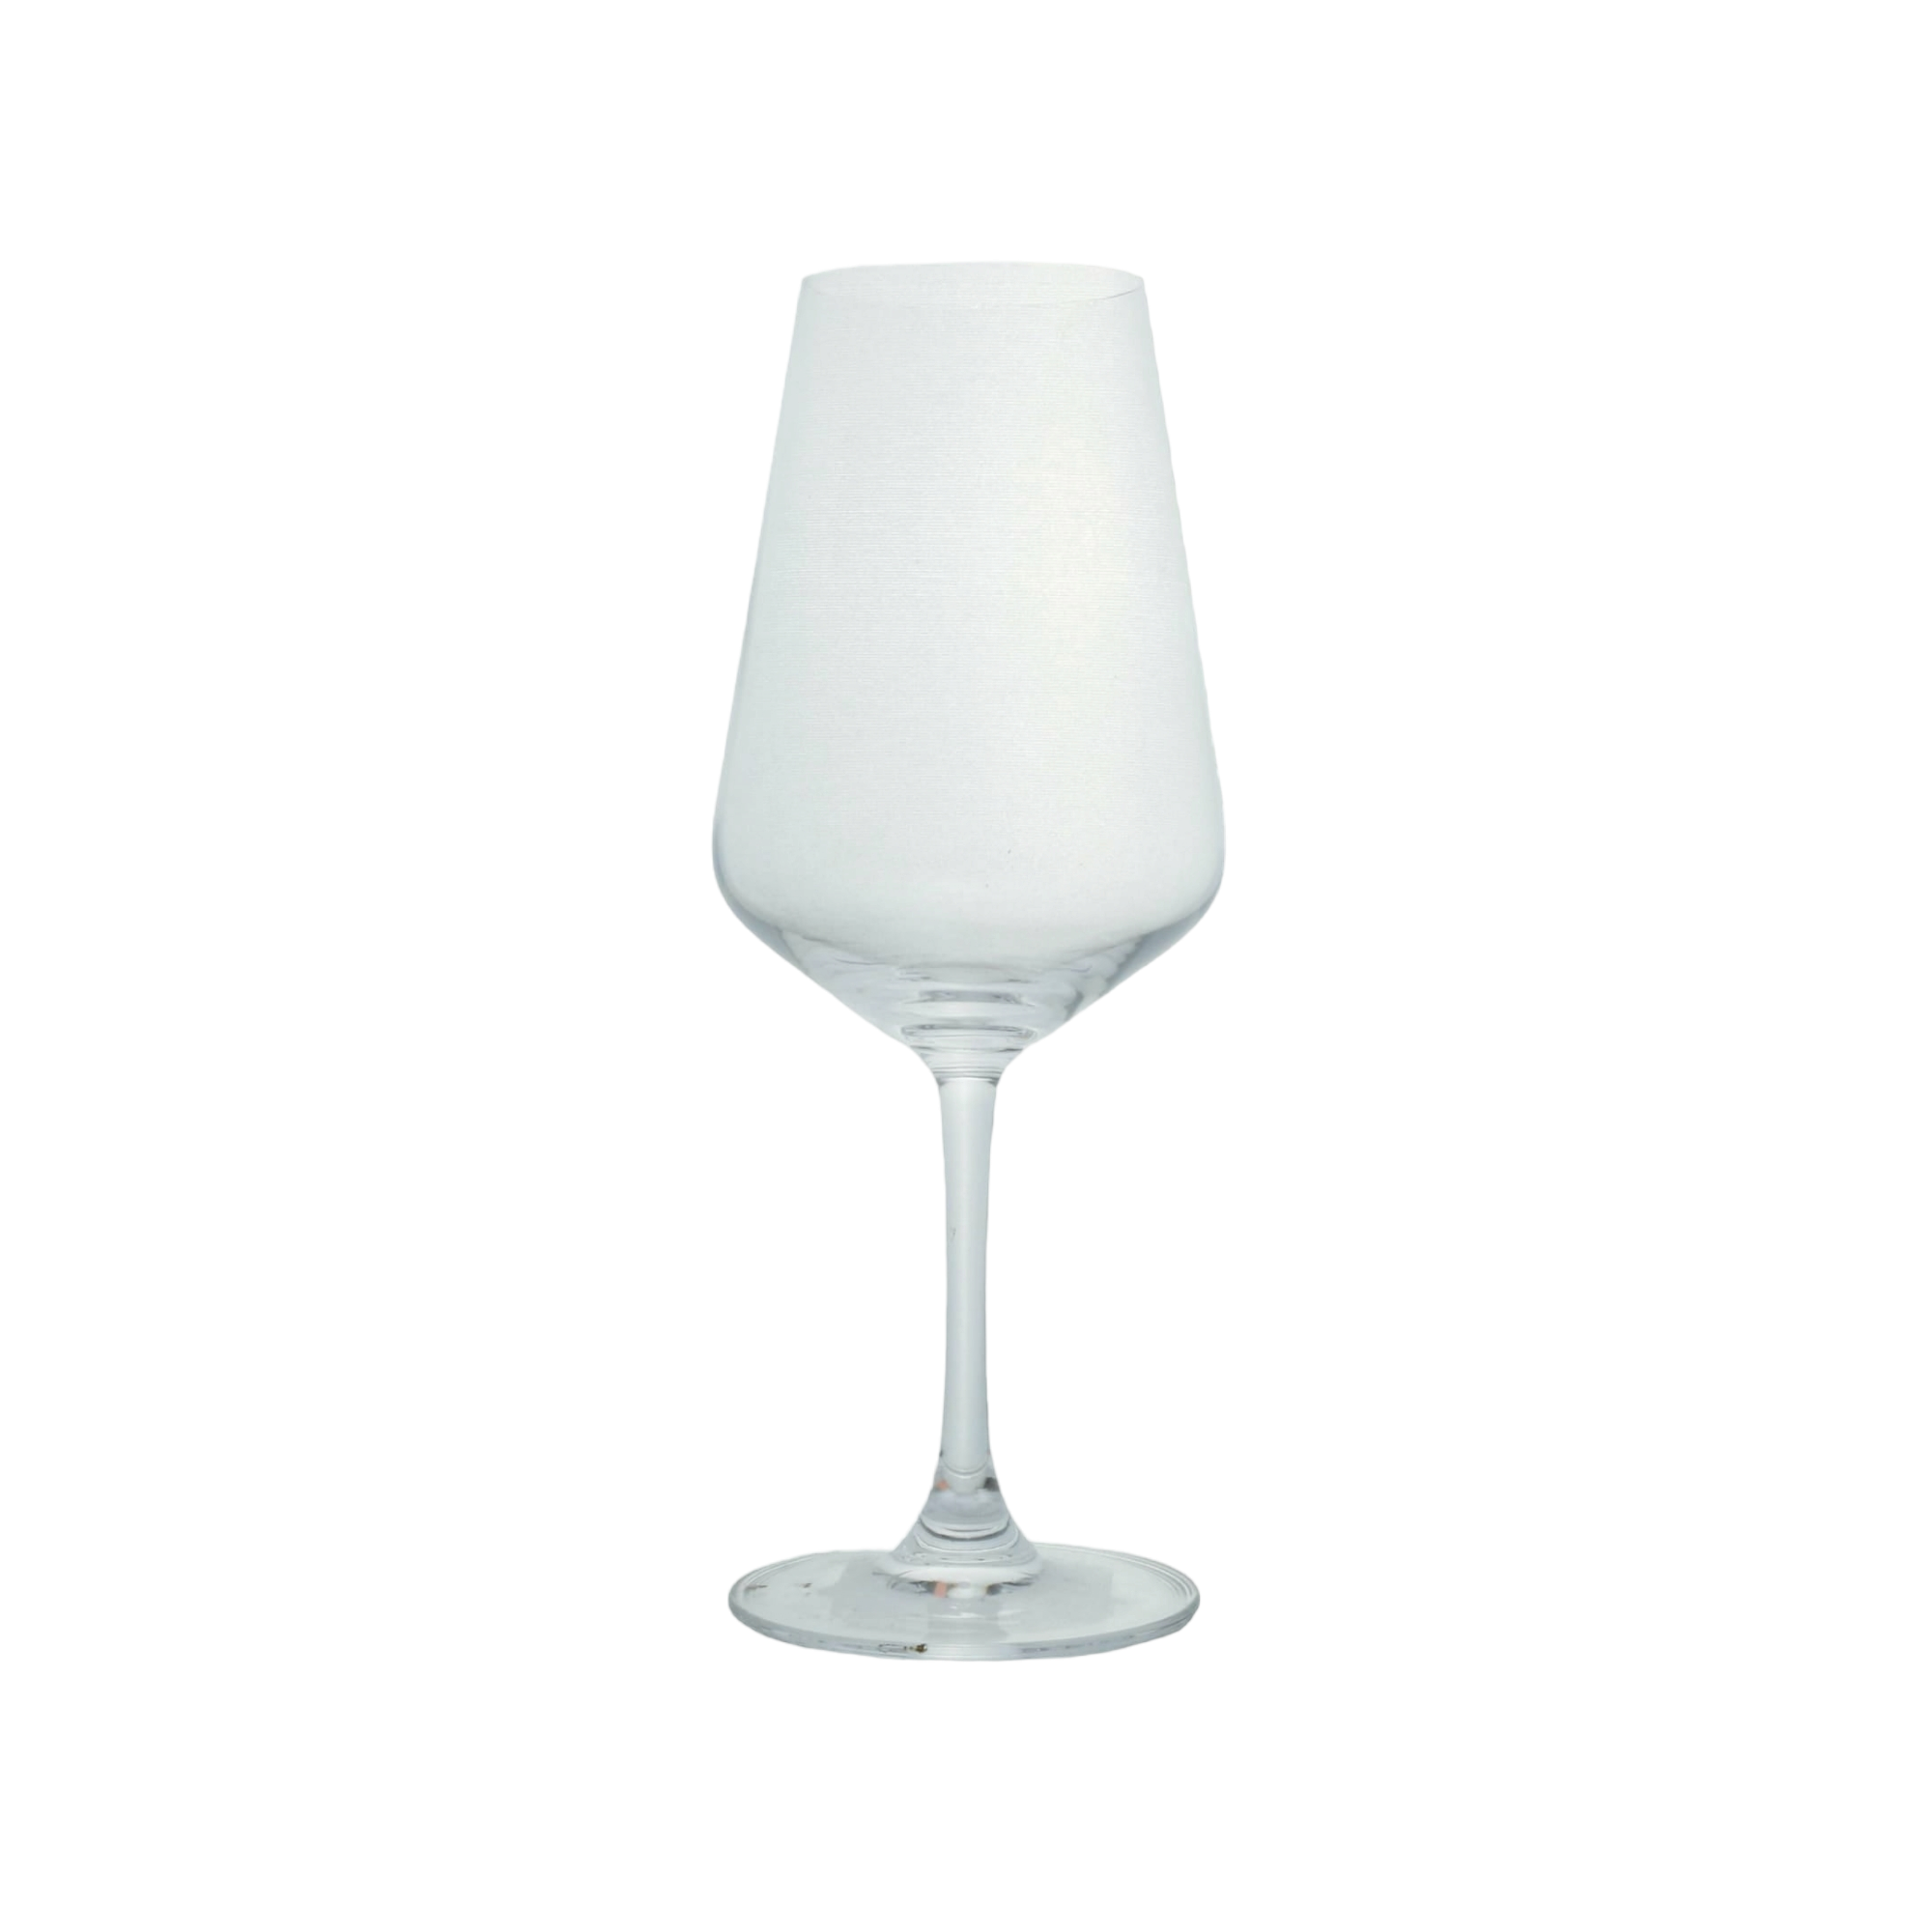 Pasabahce Glass Tumbler 350ml Allegra Red Wine 41128